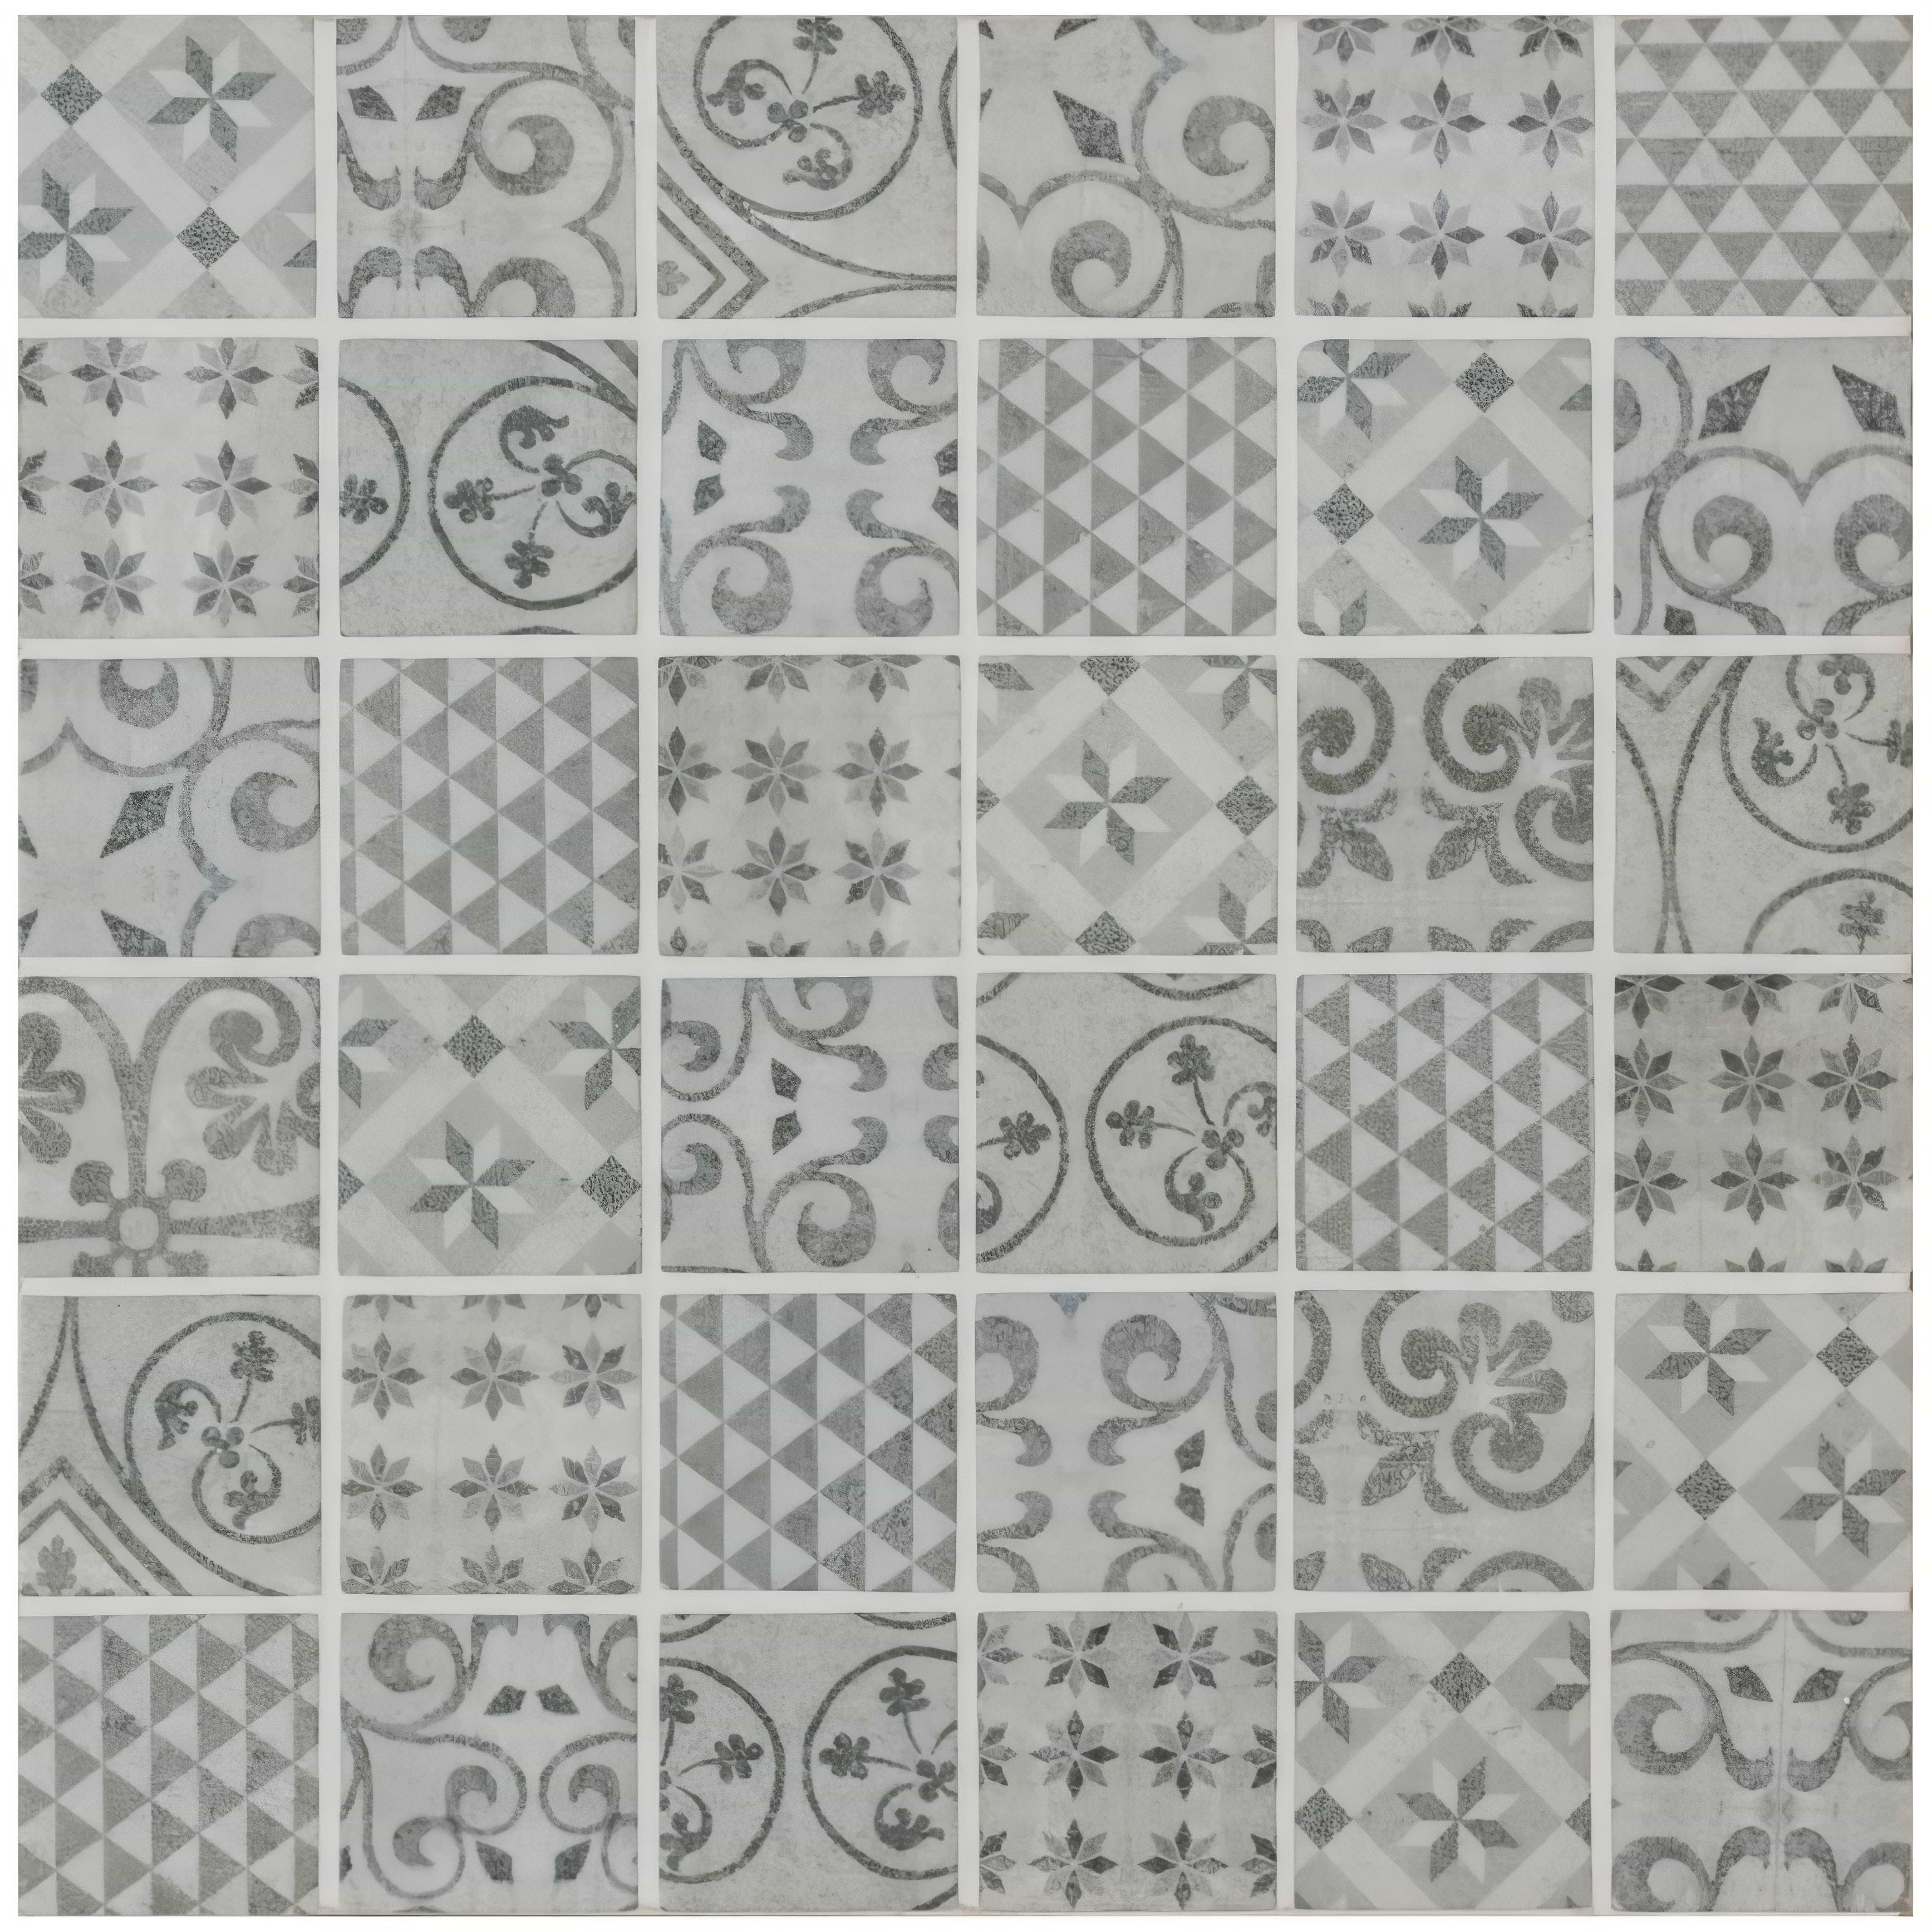 Medine Patterned Mosaic - Hyperion Tiles